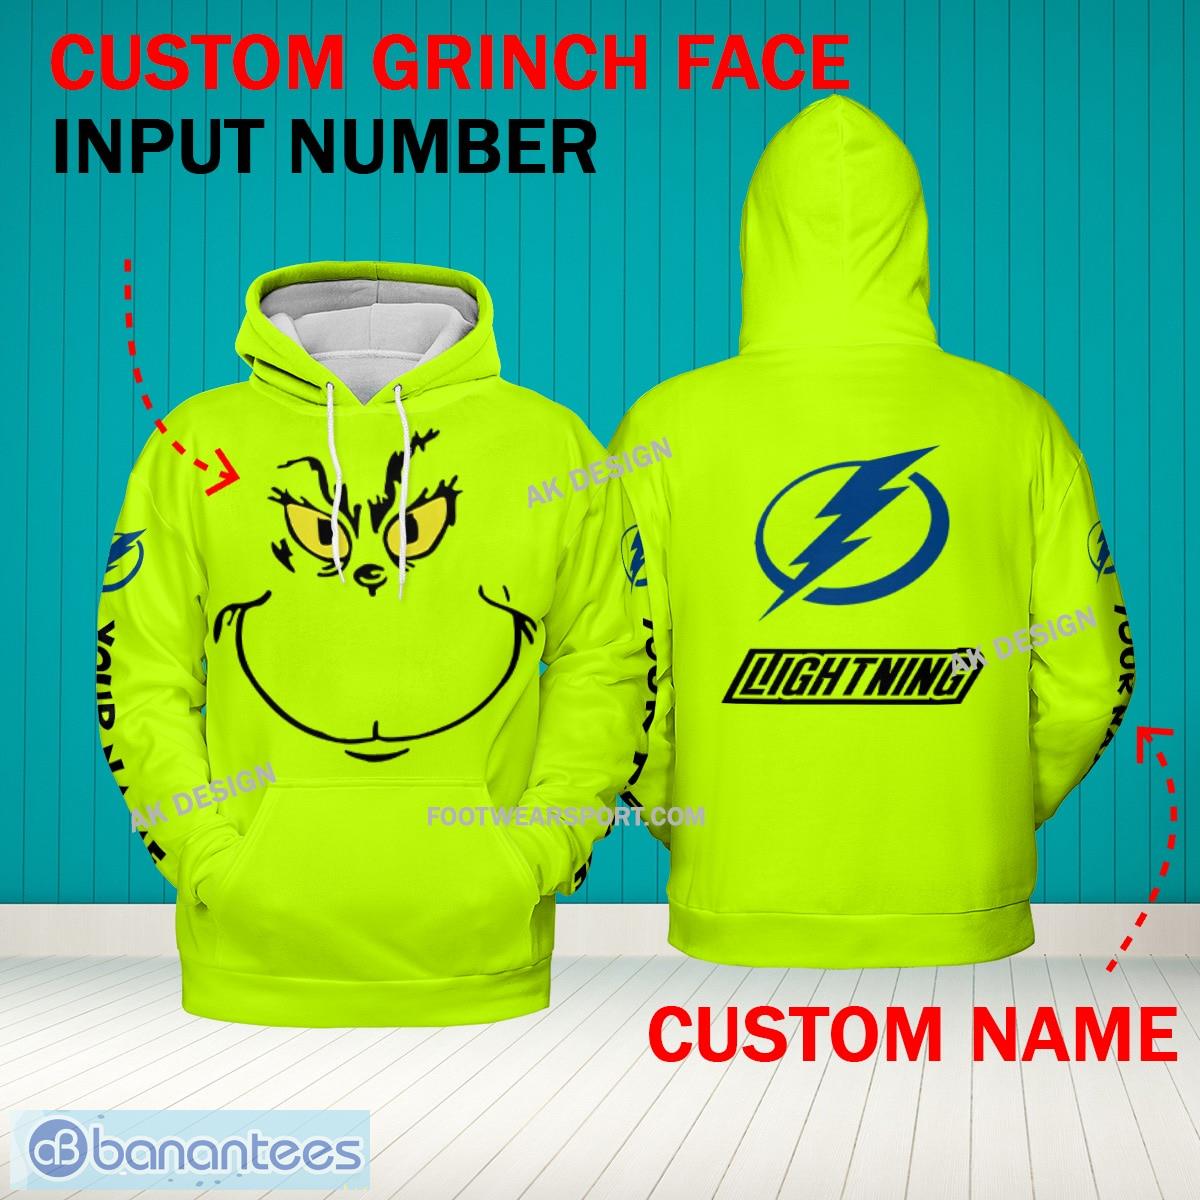 Grinch Face Tampa Bay Lightning 3D Hoodie, Zip Hoodie, Sweater Green AOP Custom Number And Name - Grinch Face NHL Tampa Bay Lightning 3D Hoodie